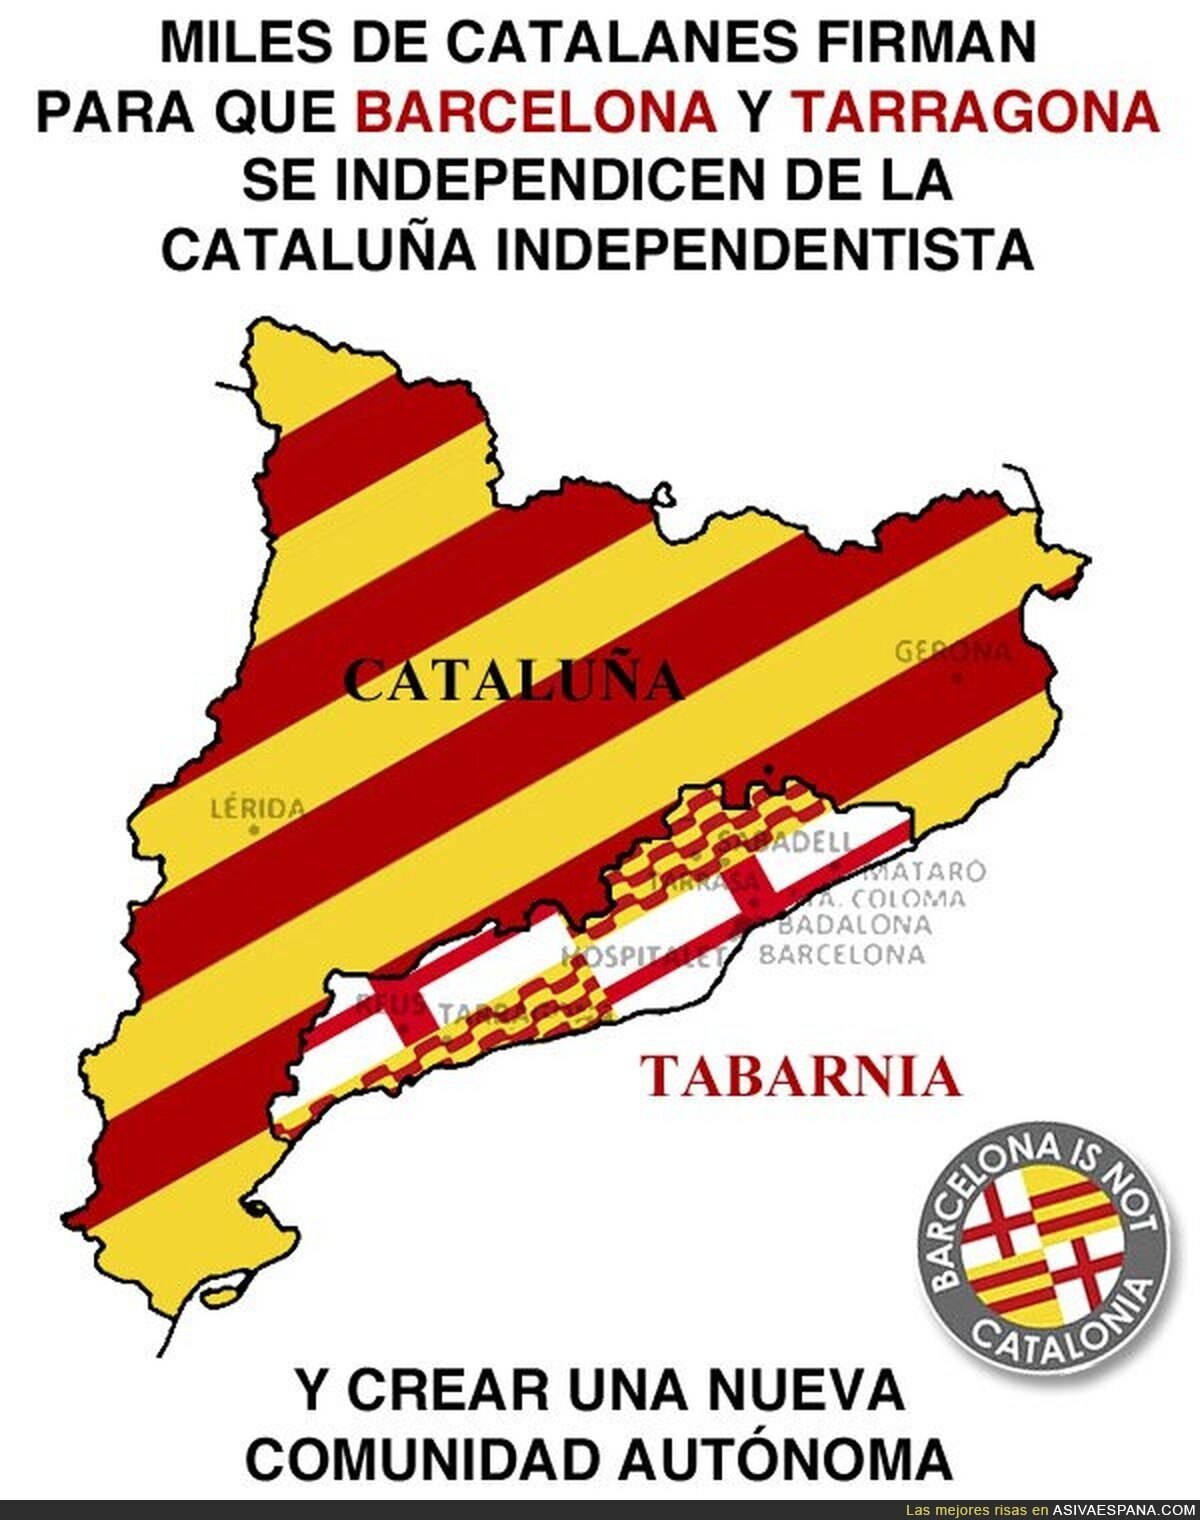 Help Tabarnia, Save Spain